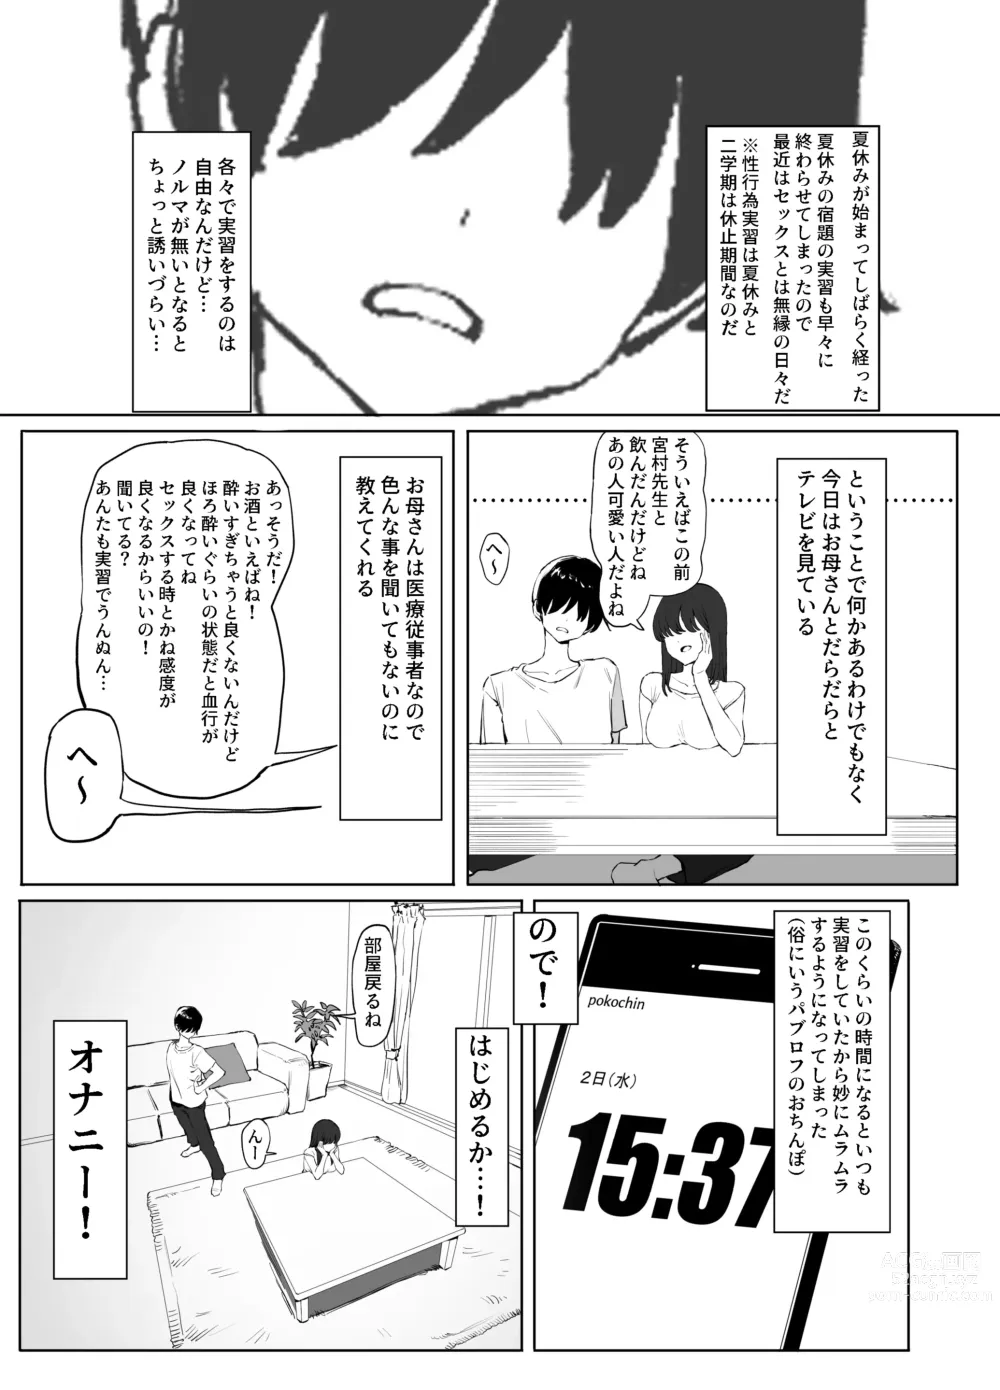 Page 1 of doujinshi Seikoui Jisshuu 2